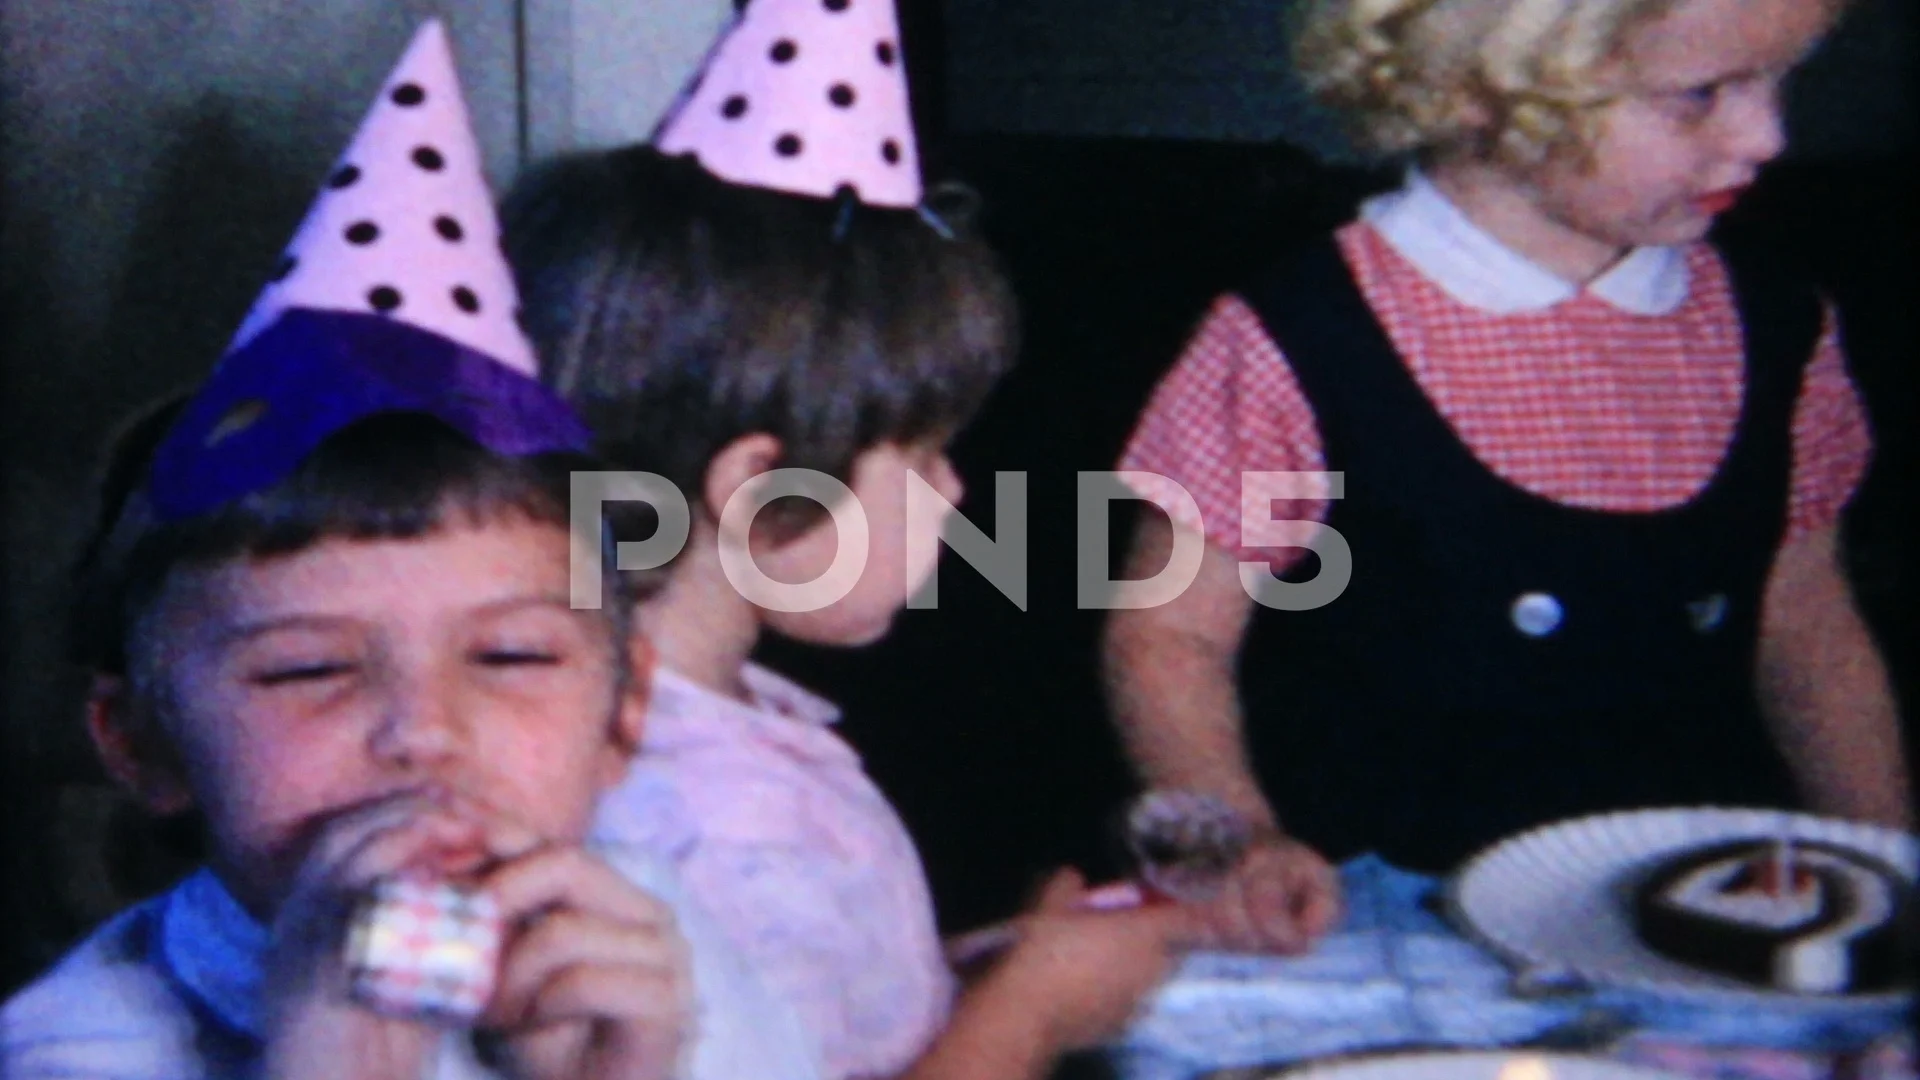 vintage kids birthday party